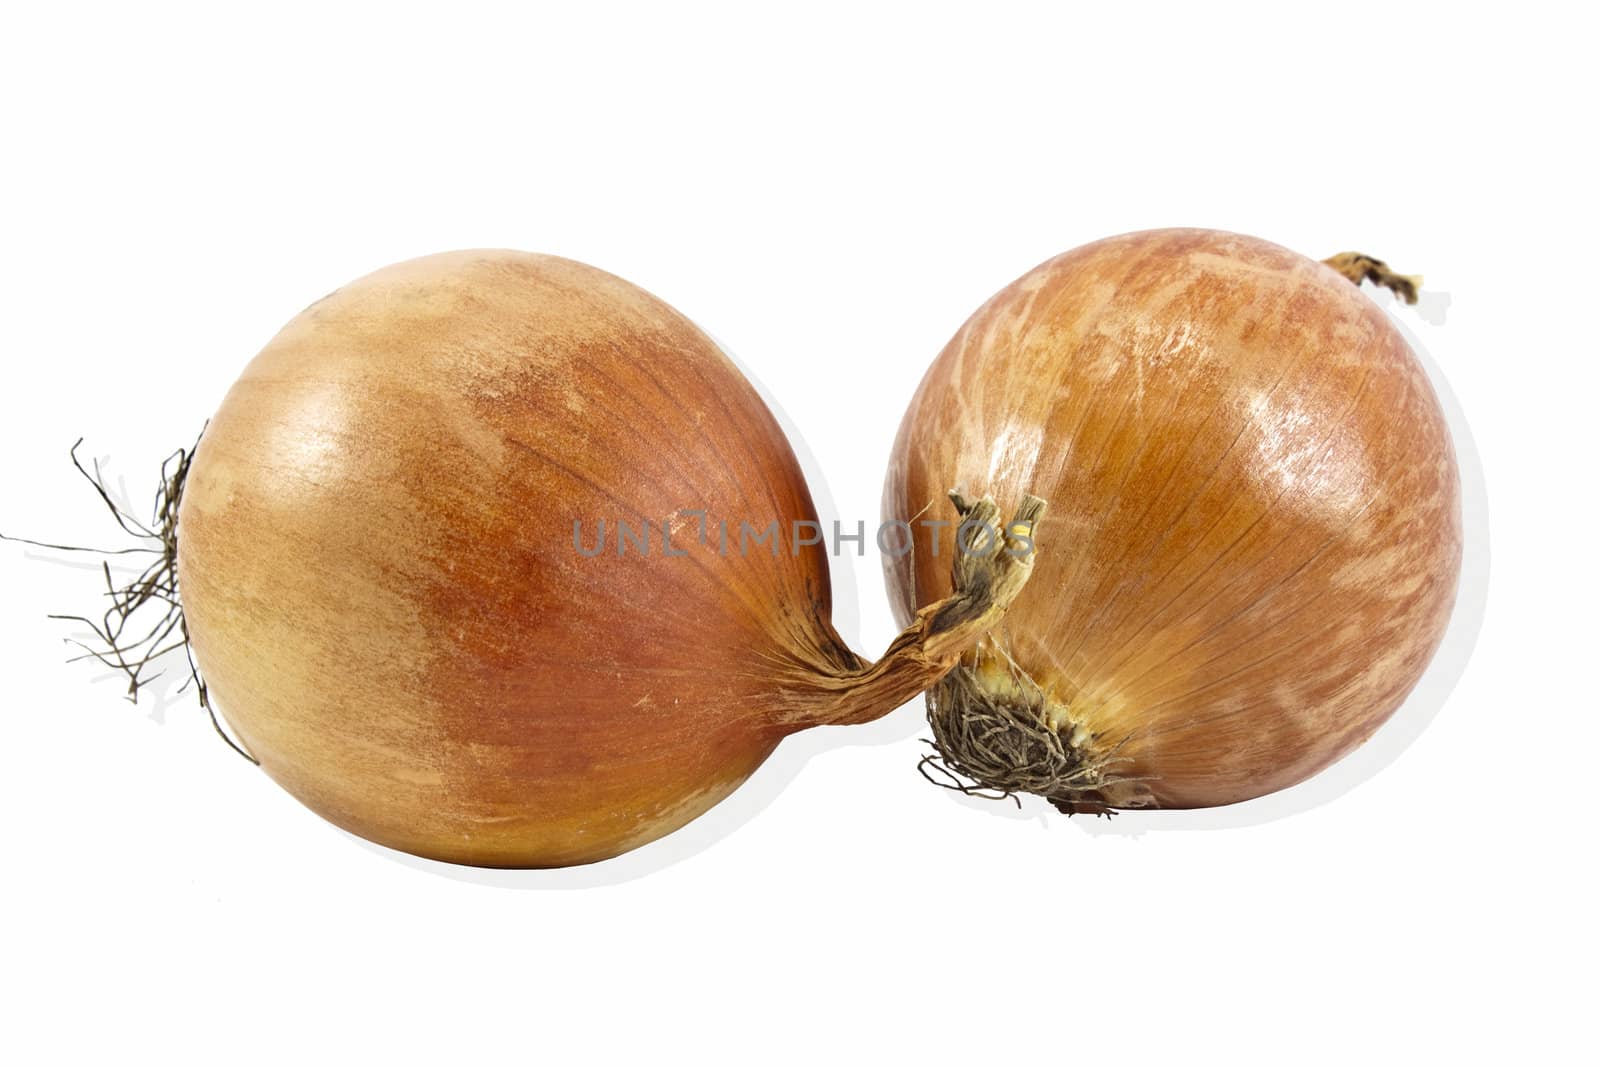 onion on a white background by aziatik13